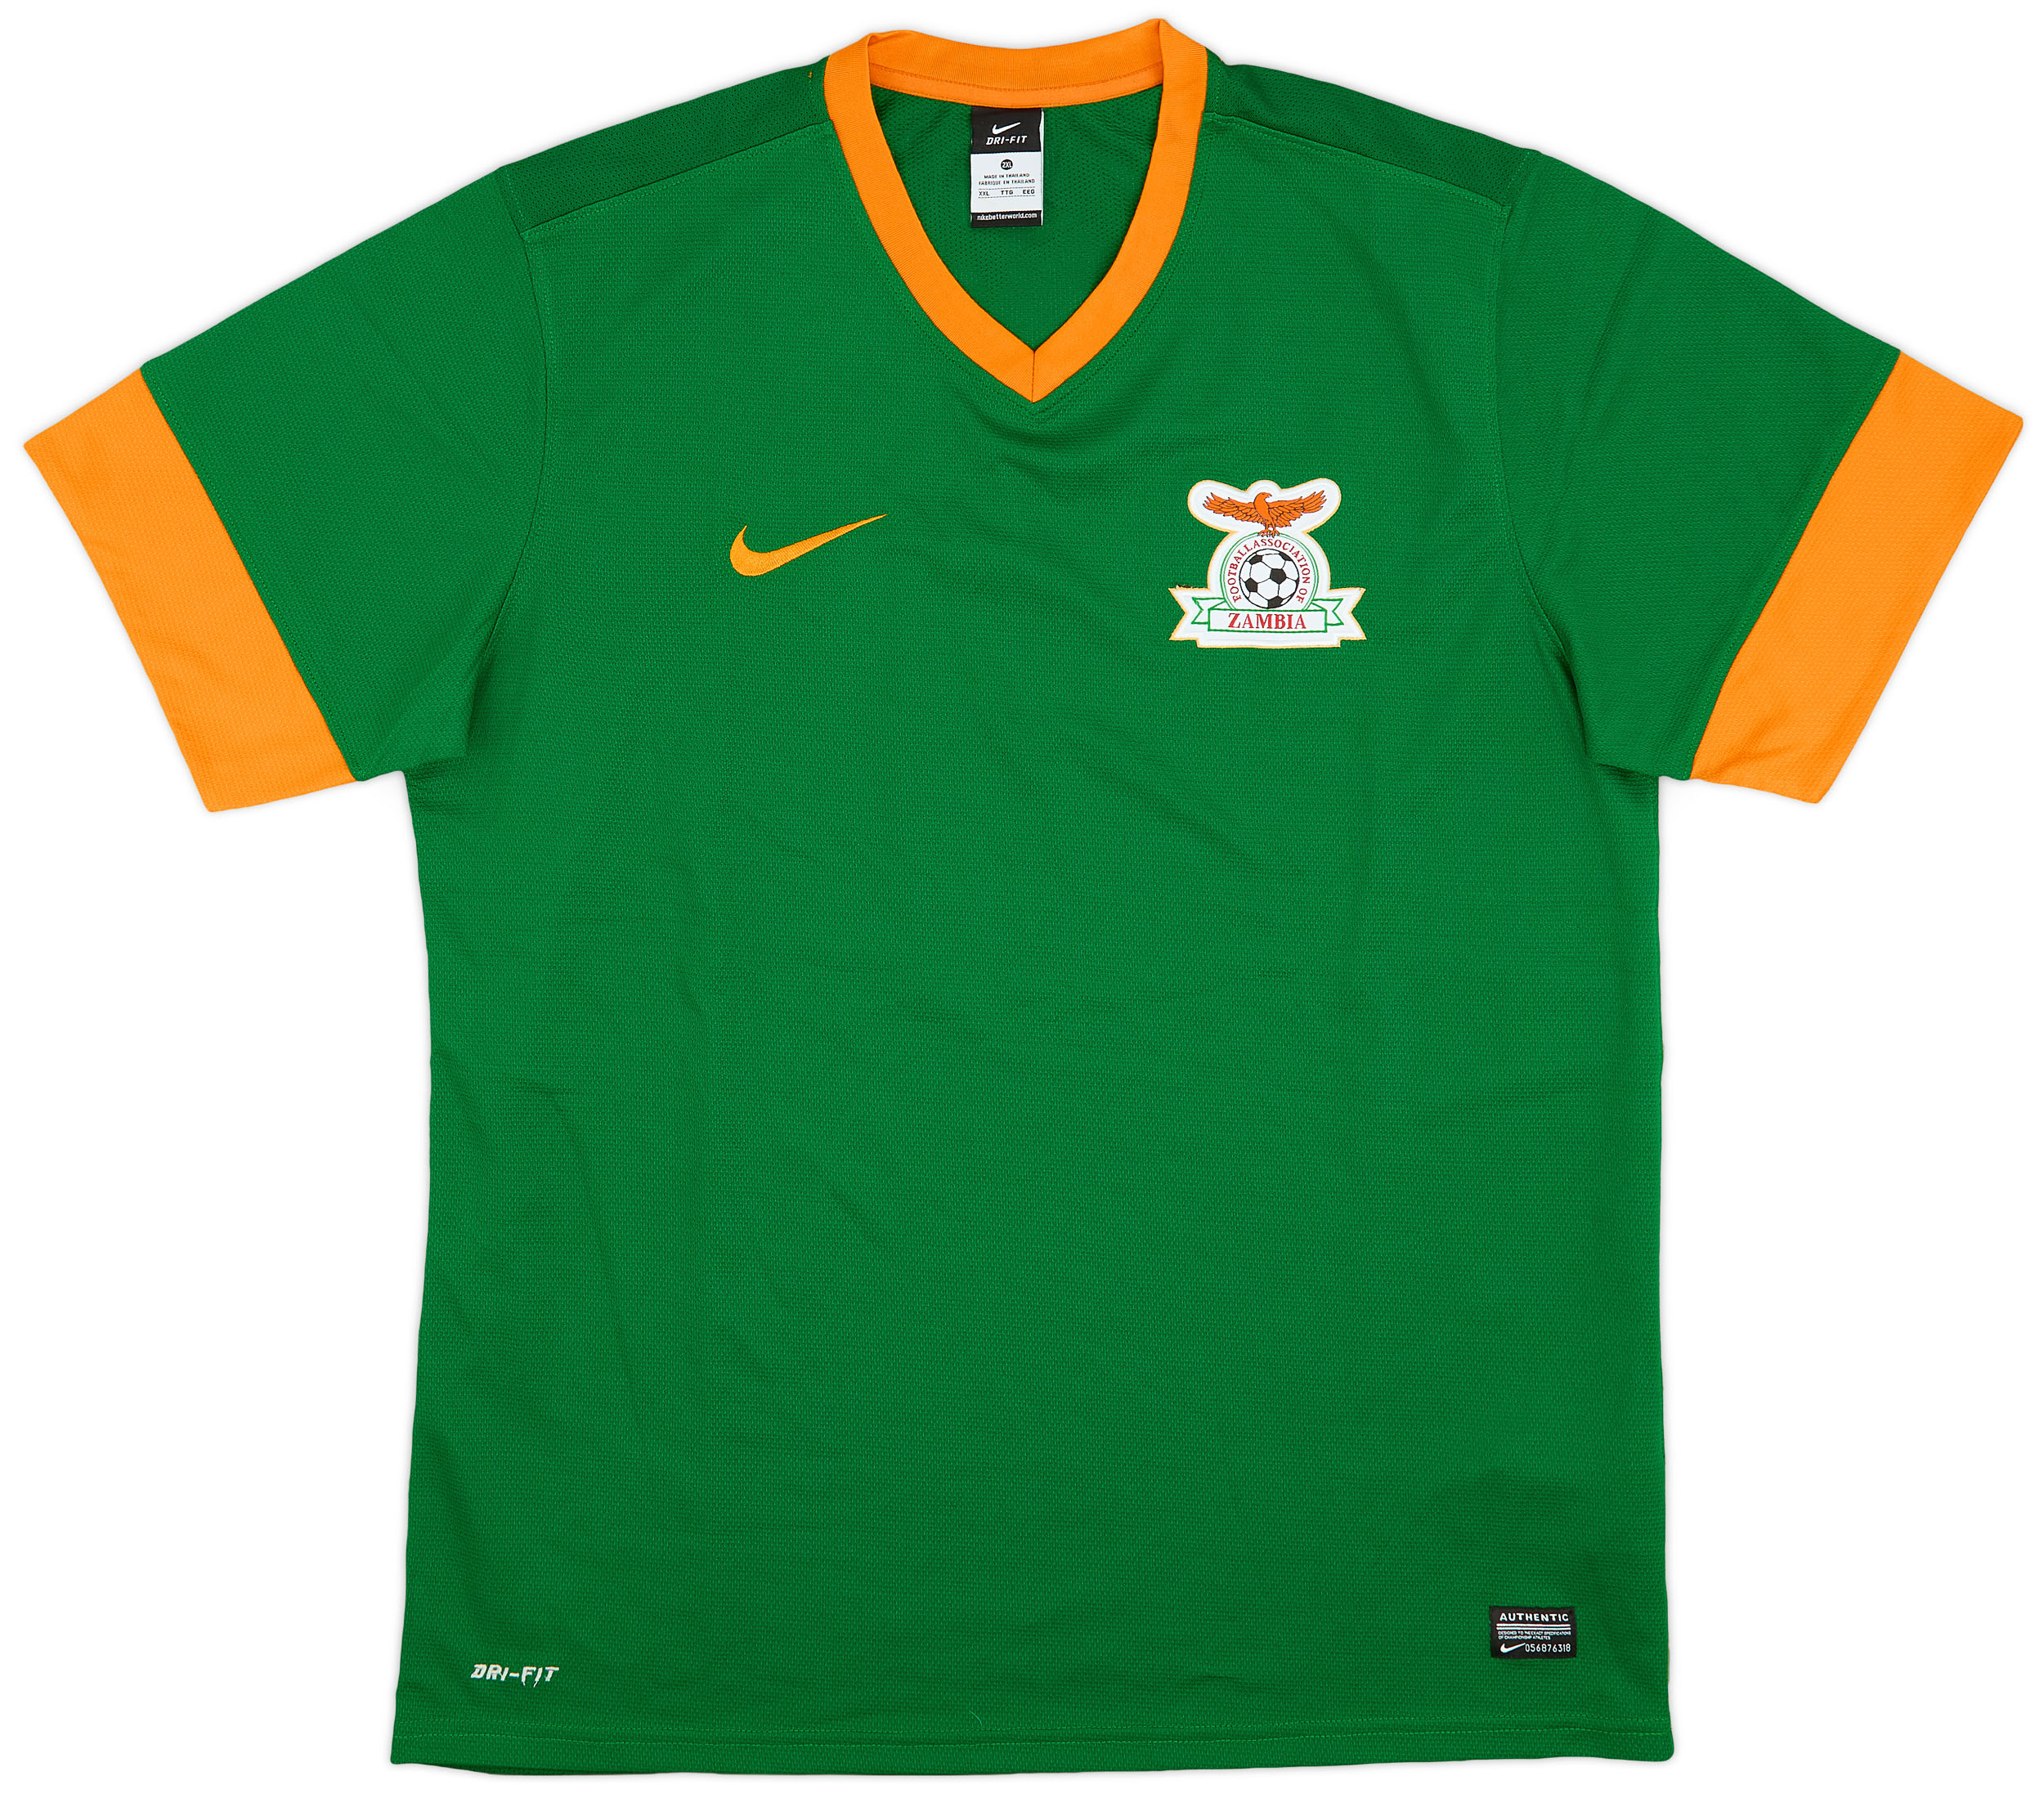 Zambia  home shirt  (Original)